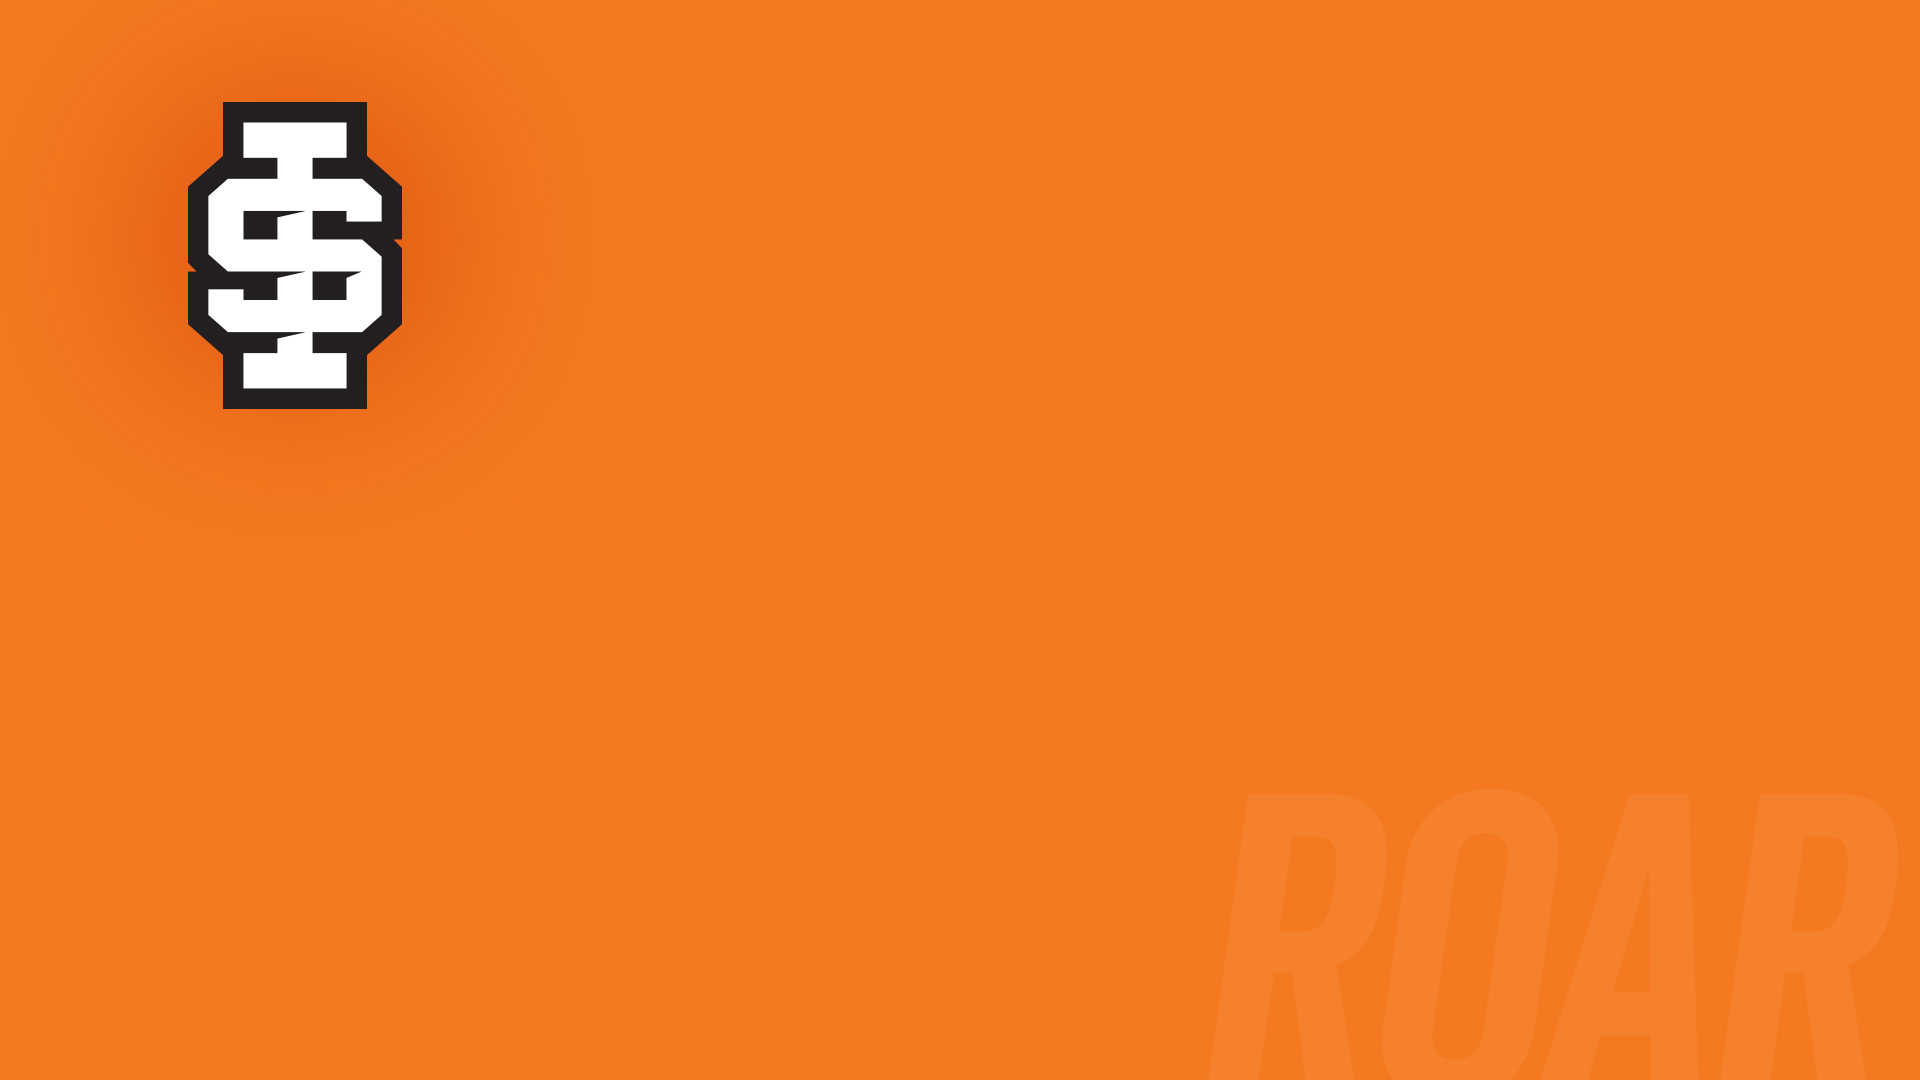 Spirit mark/orange background for Zoom